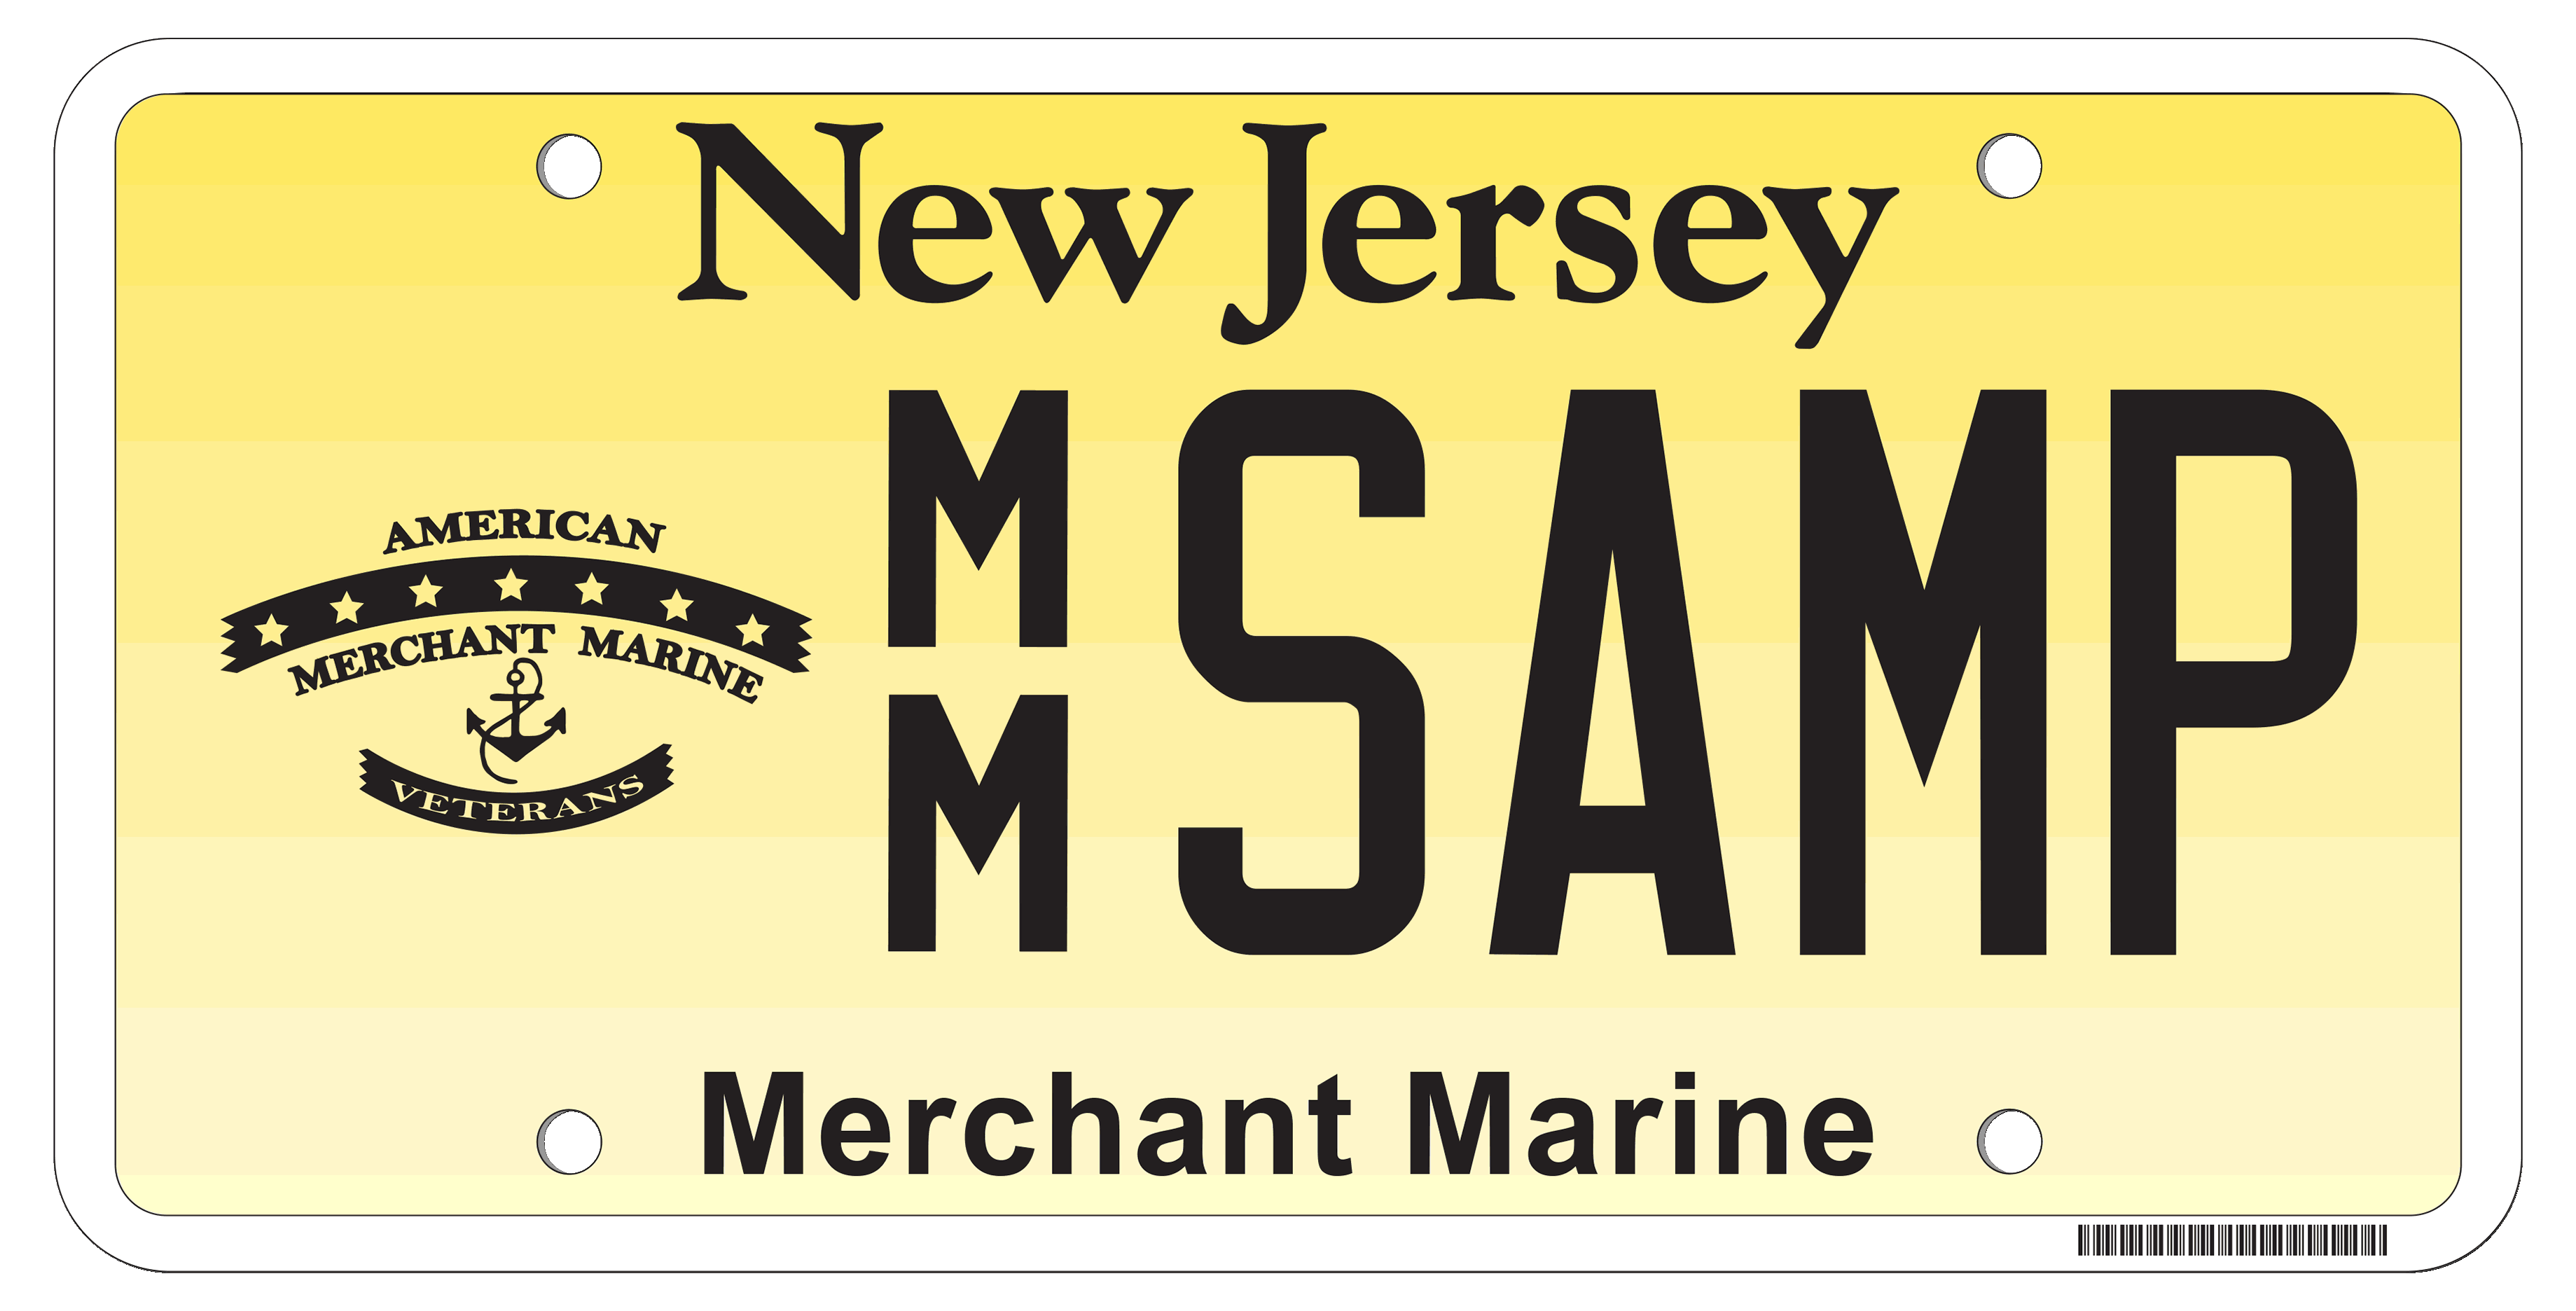 Merchant Marine.